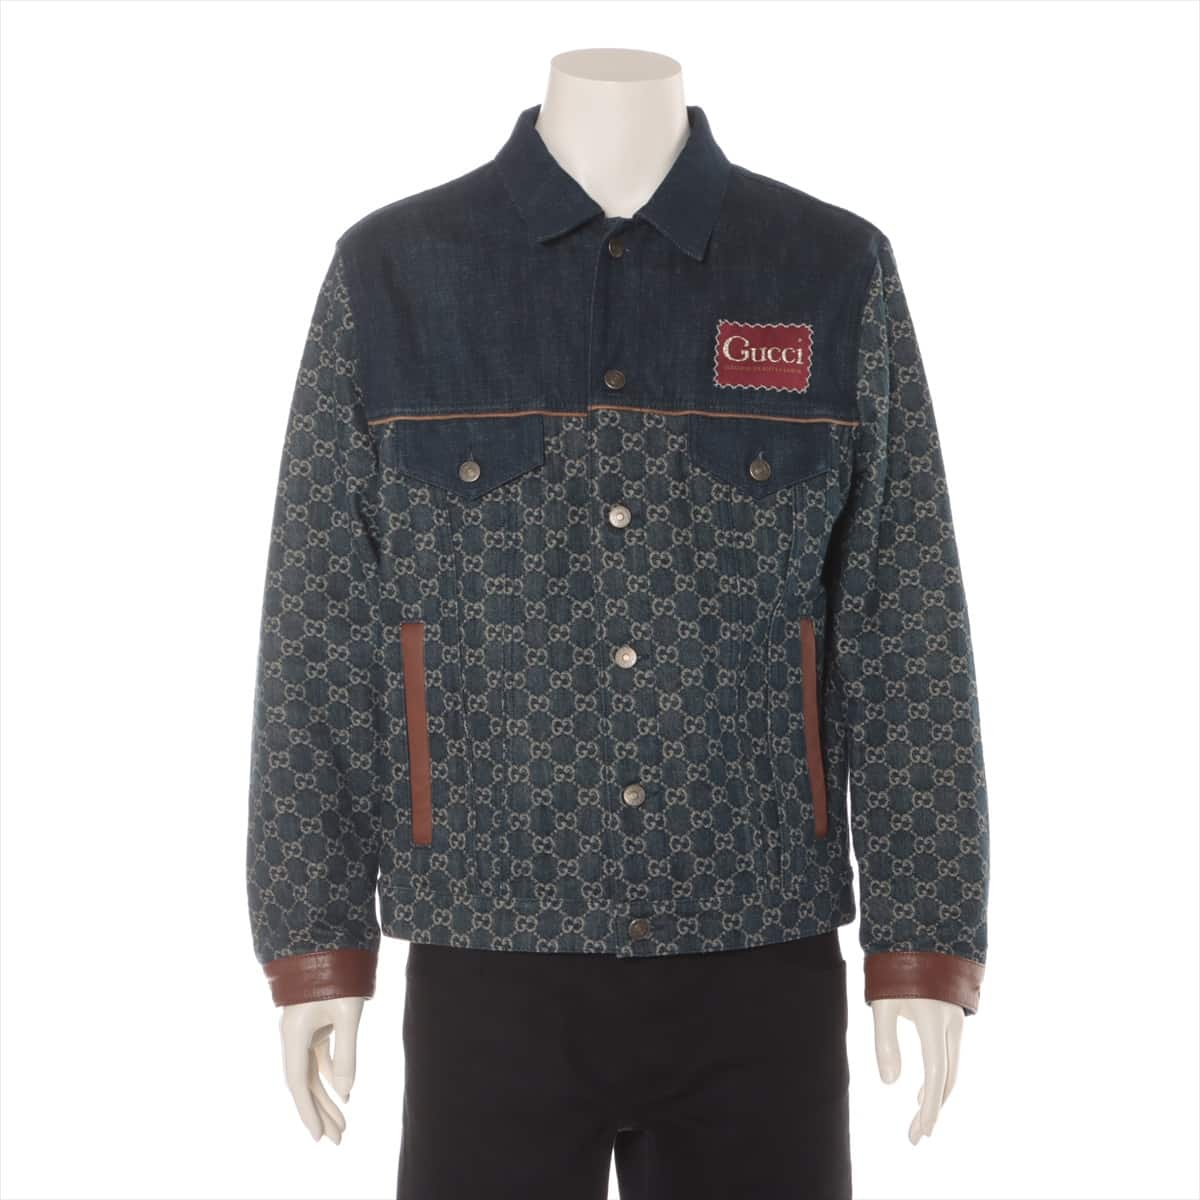 Gucci 21SS Cotton Denim jacket 44 Men's Navy blue  649110 GG Eco washed organic denim Jacket